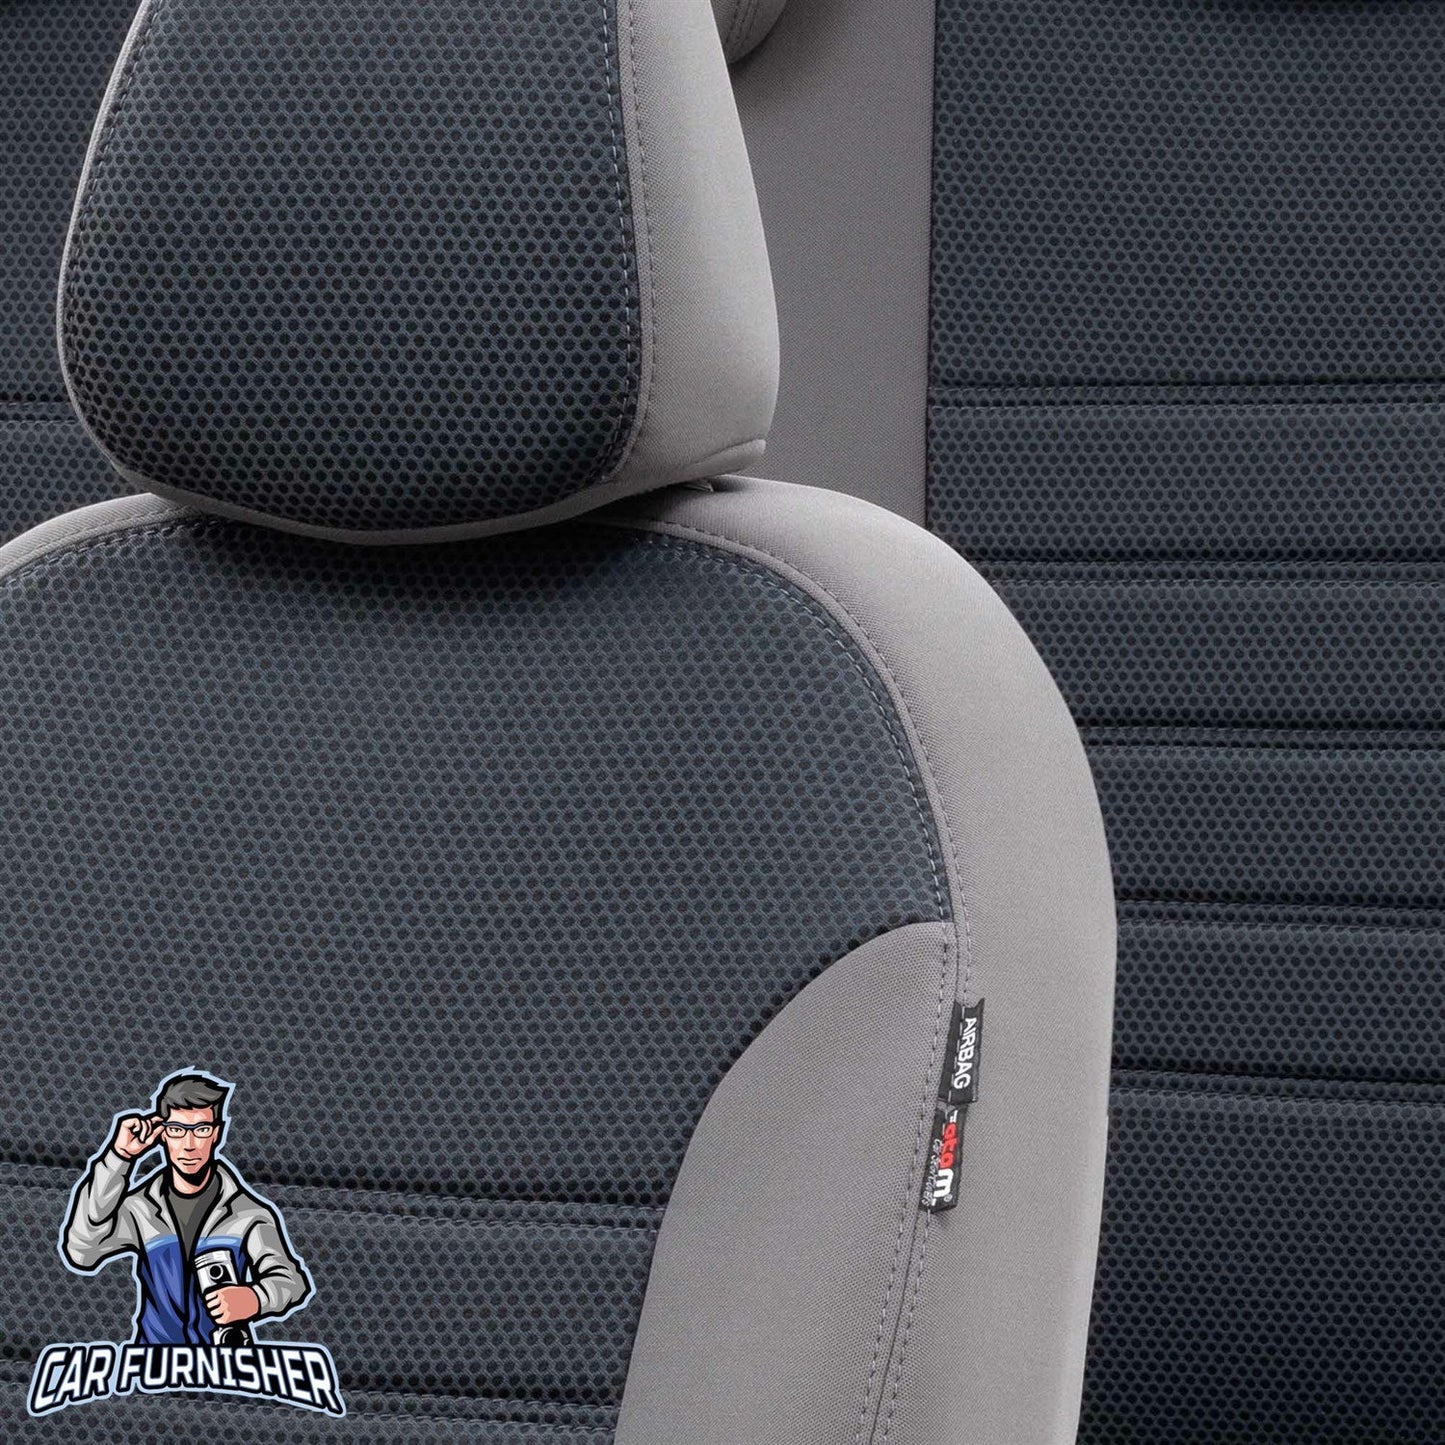 Mercedes B Class Seat Covers Original Jacquard Design Smoked Jacquard Fabric